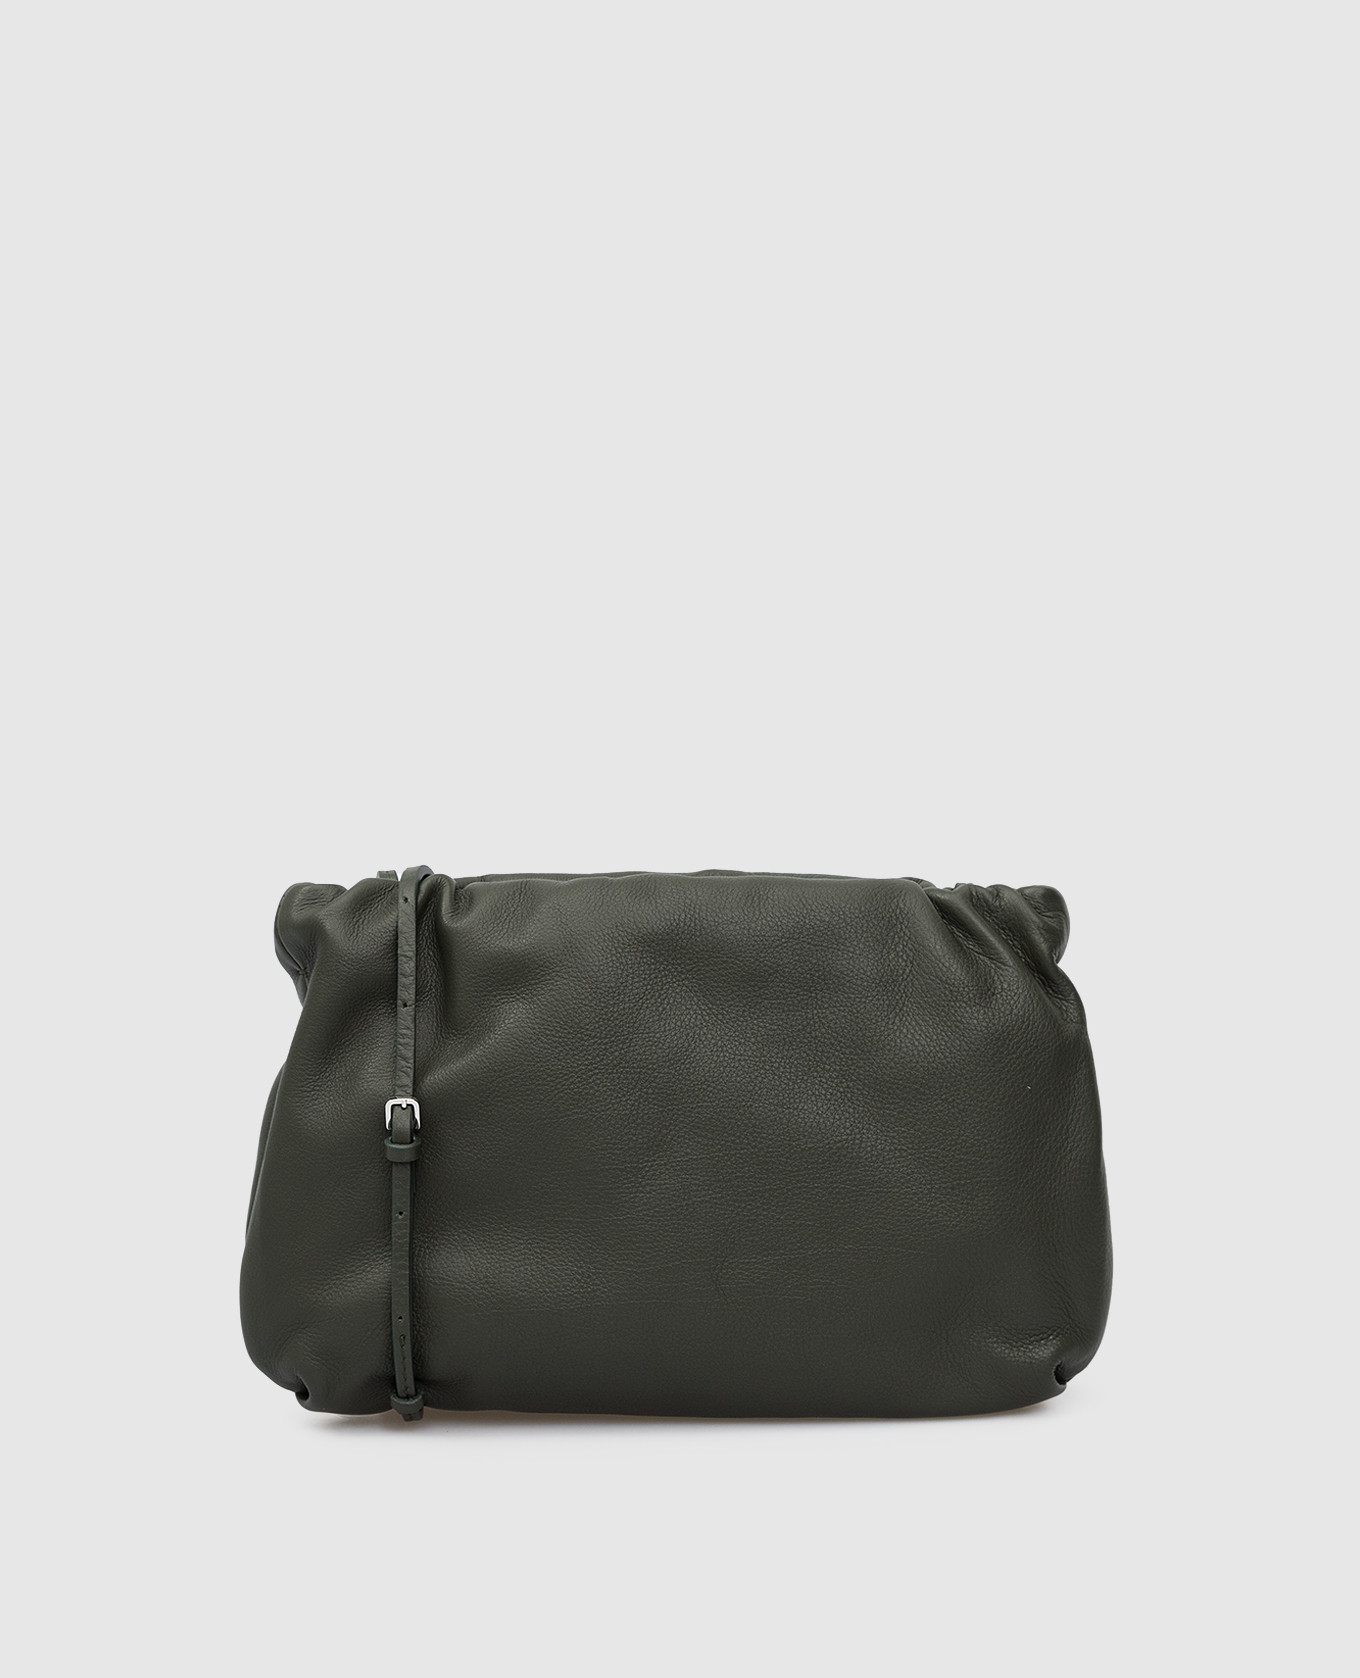 Bourse Dark Green Leather Bag